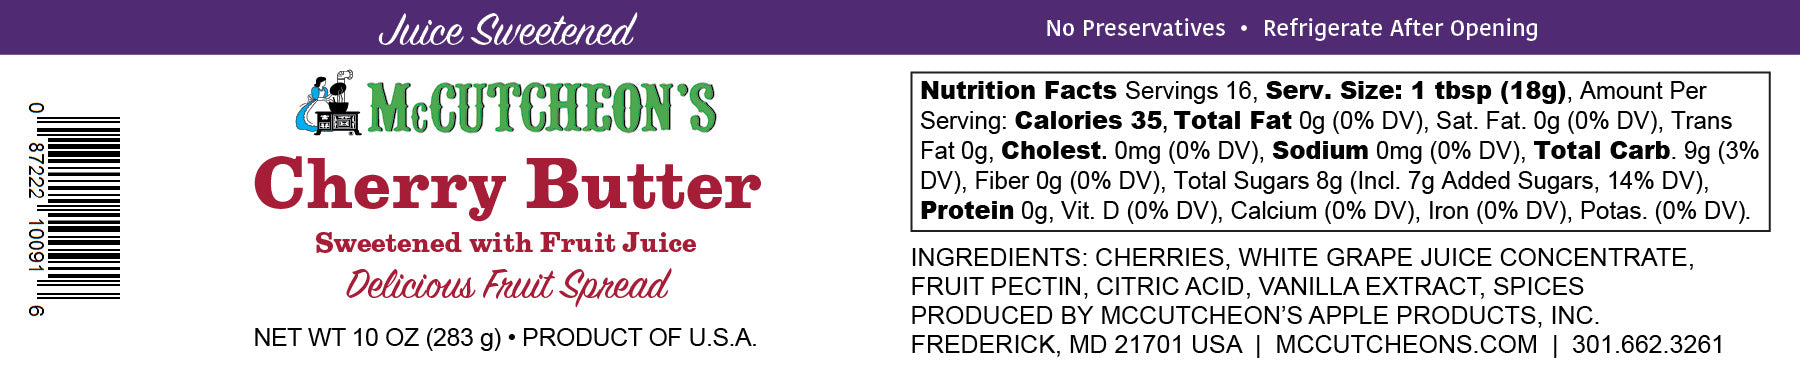 nutrition label of McCutcheon's juice sweetened cherry butter